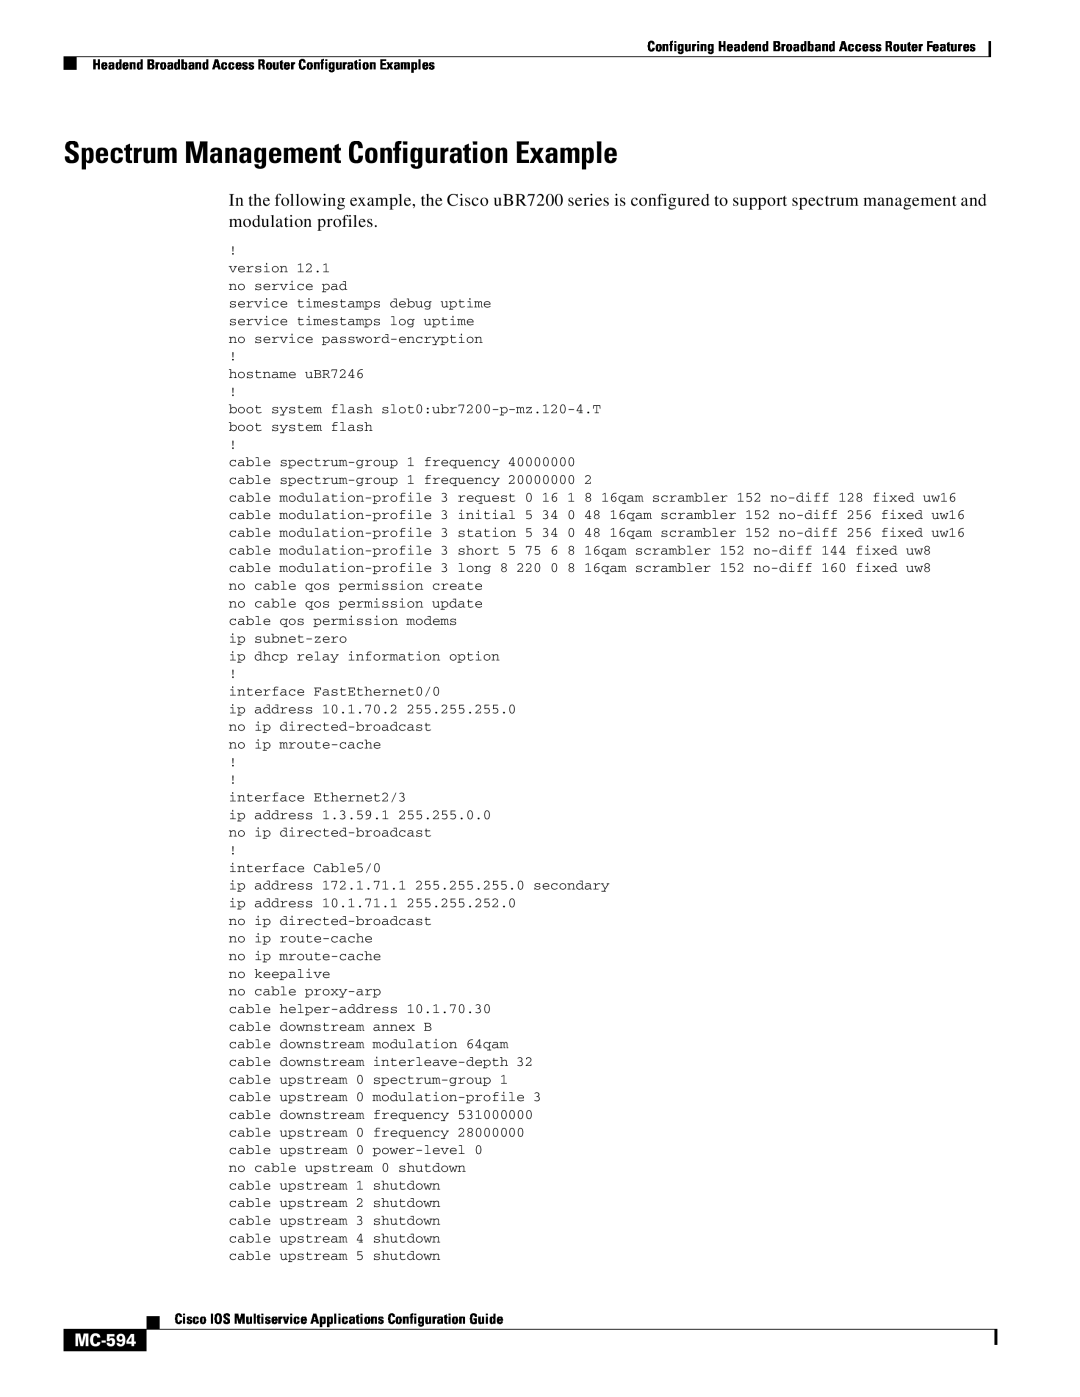 Cisco Systems uBR7200 manual Spectrum Management Configuration Example, MC-594 